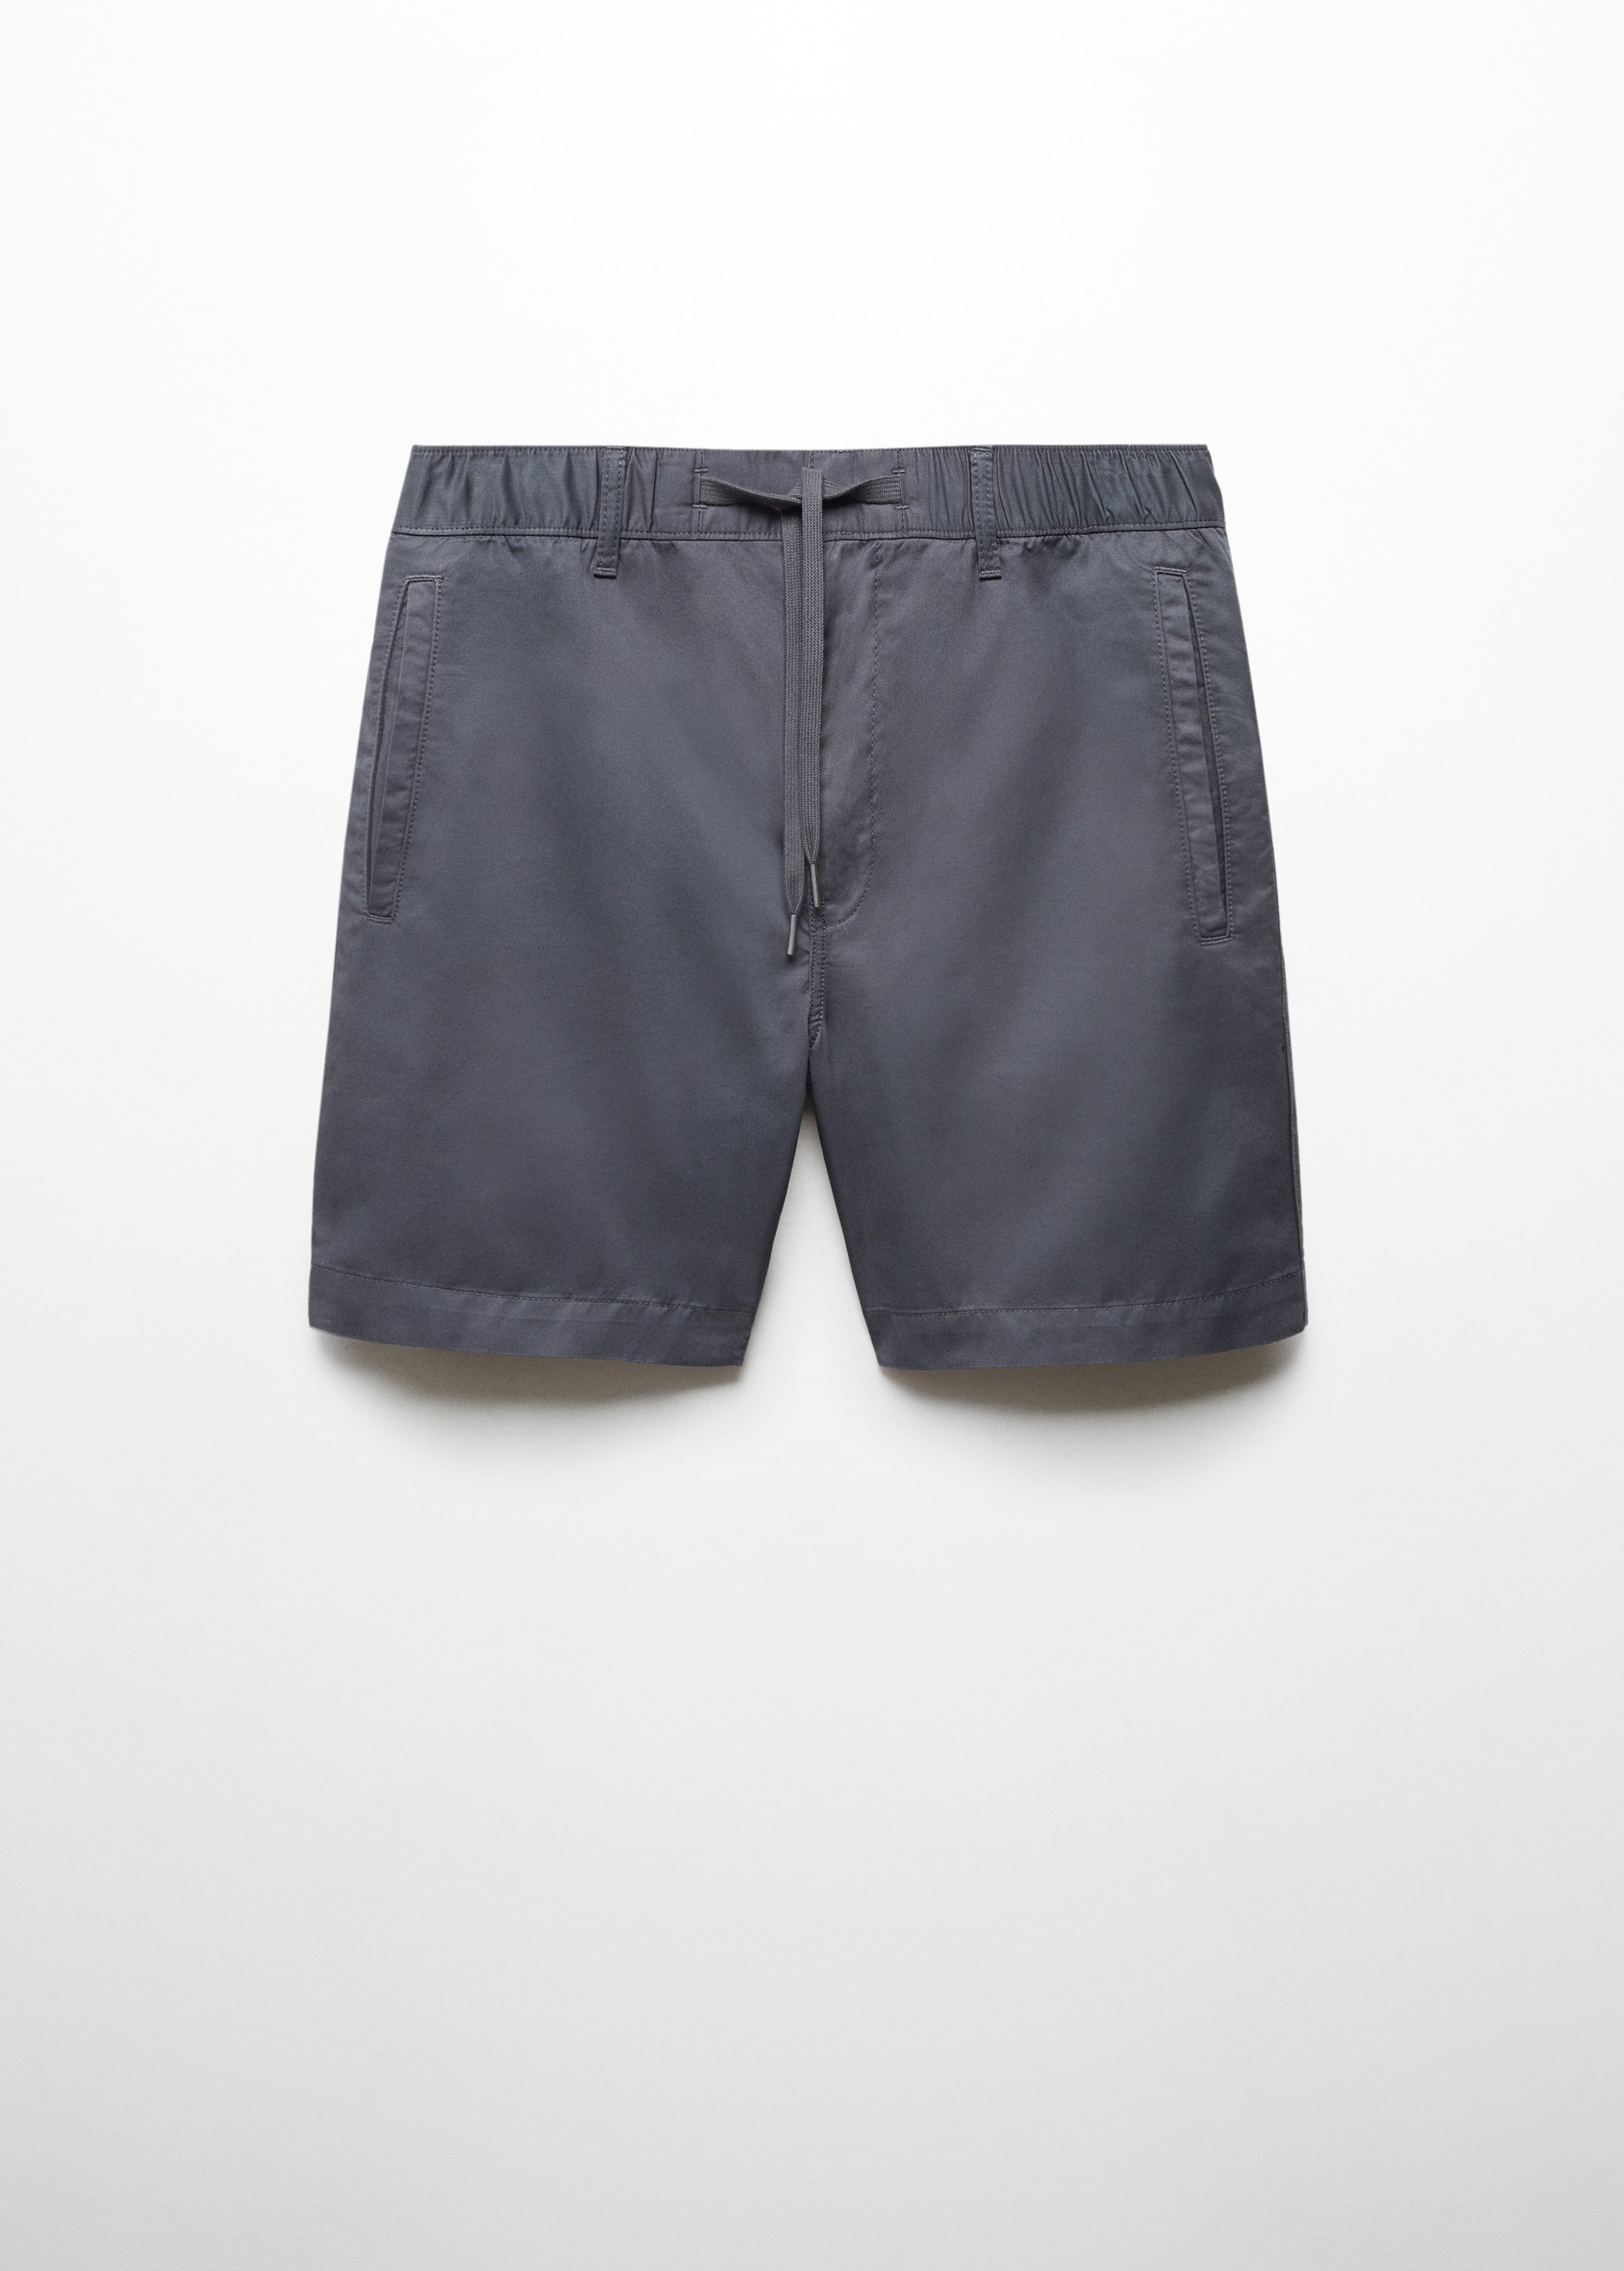 100% cotton drawstring Bermuda shorts - Article without model